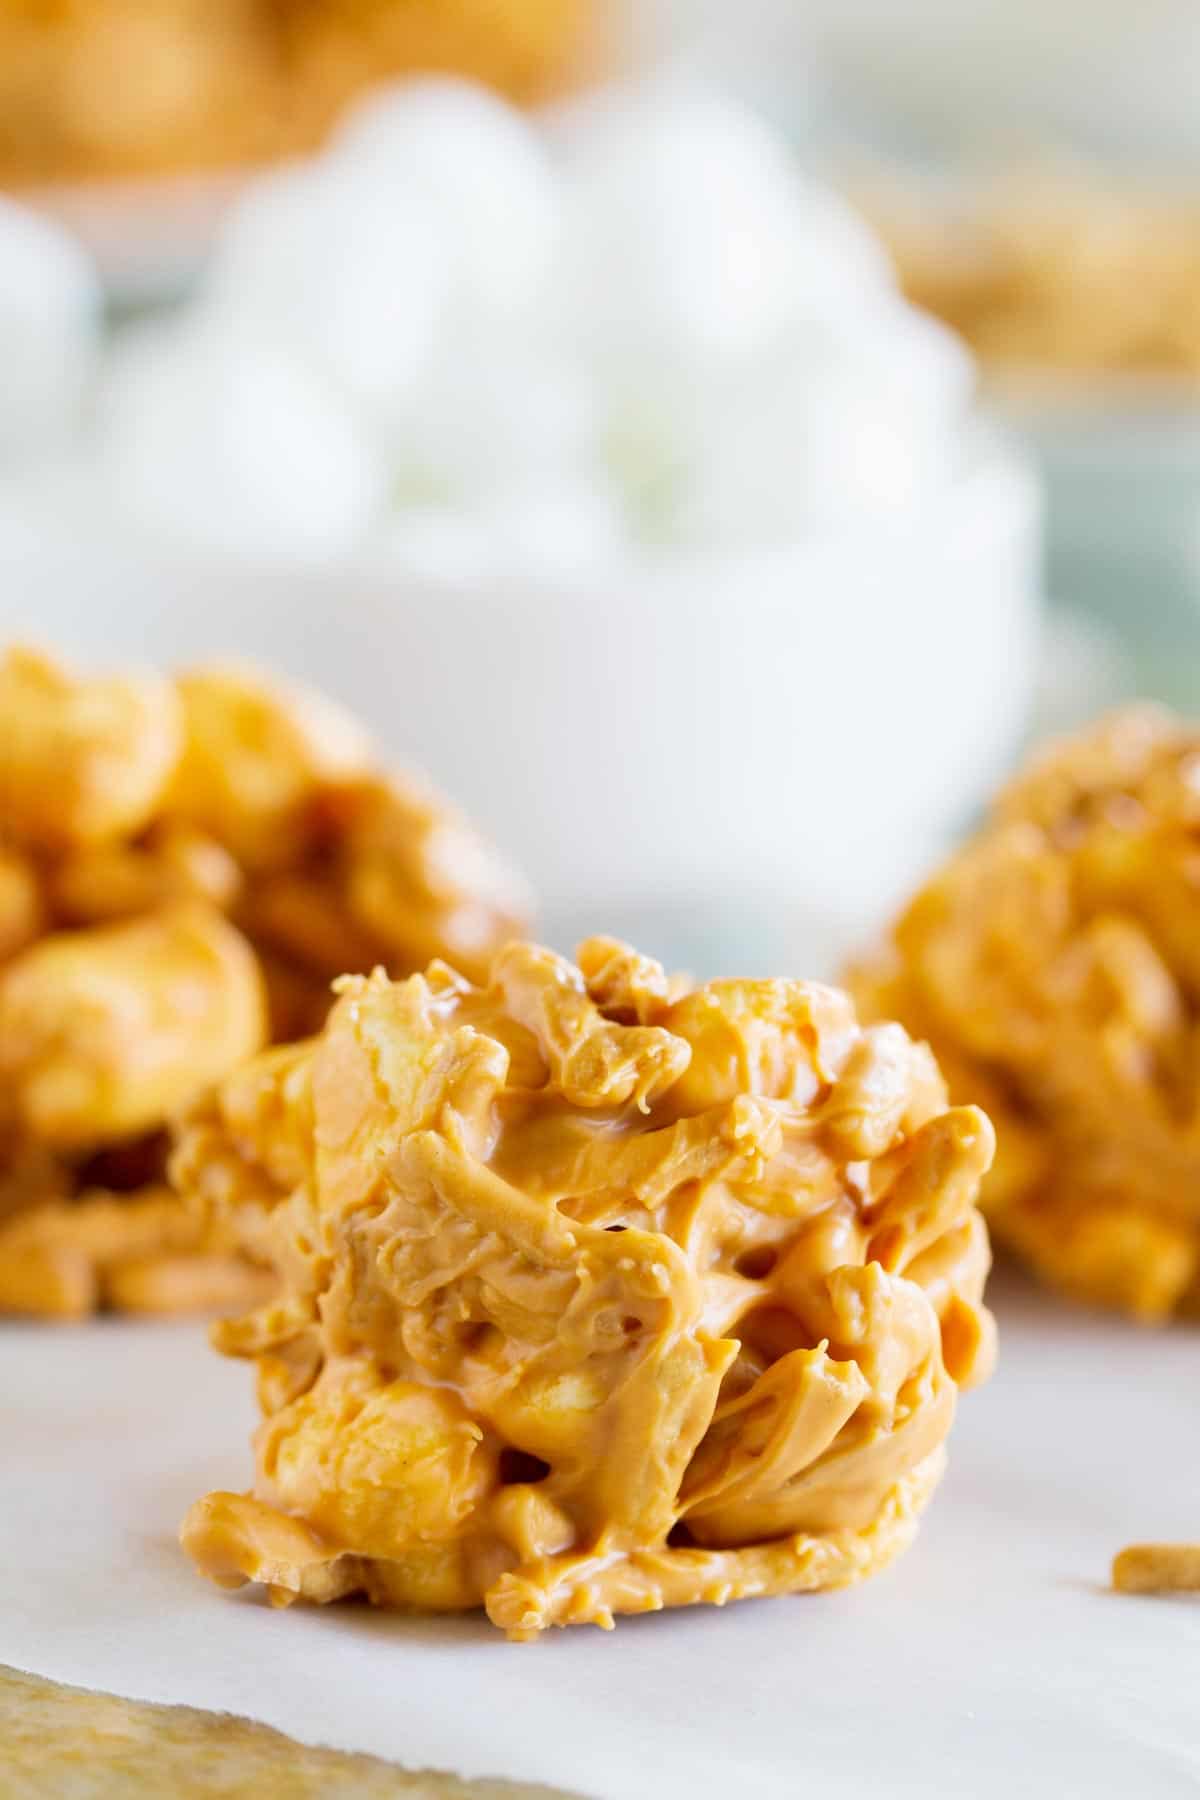 No-bake Peanut Butter Corn Flake Treats - Real Life Dinner